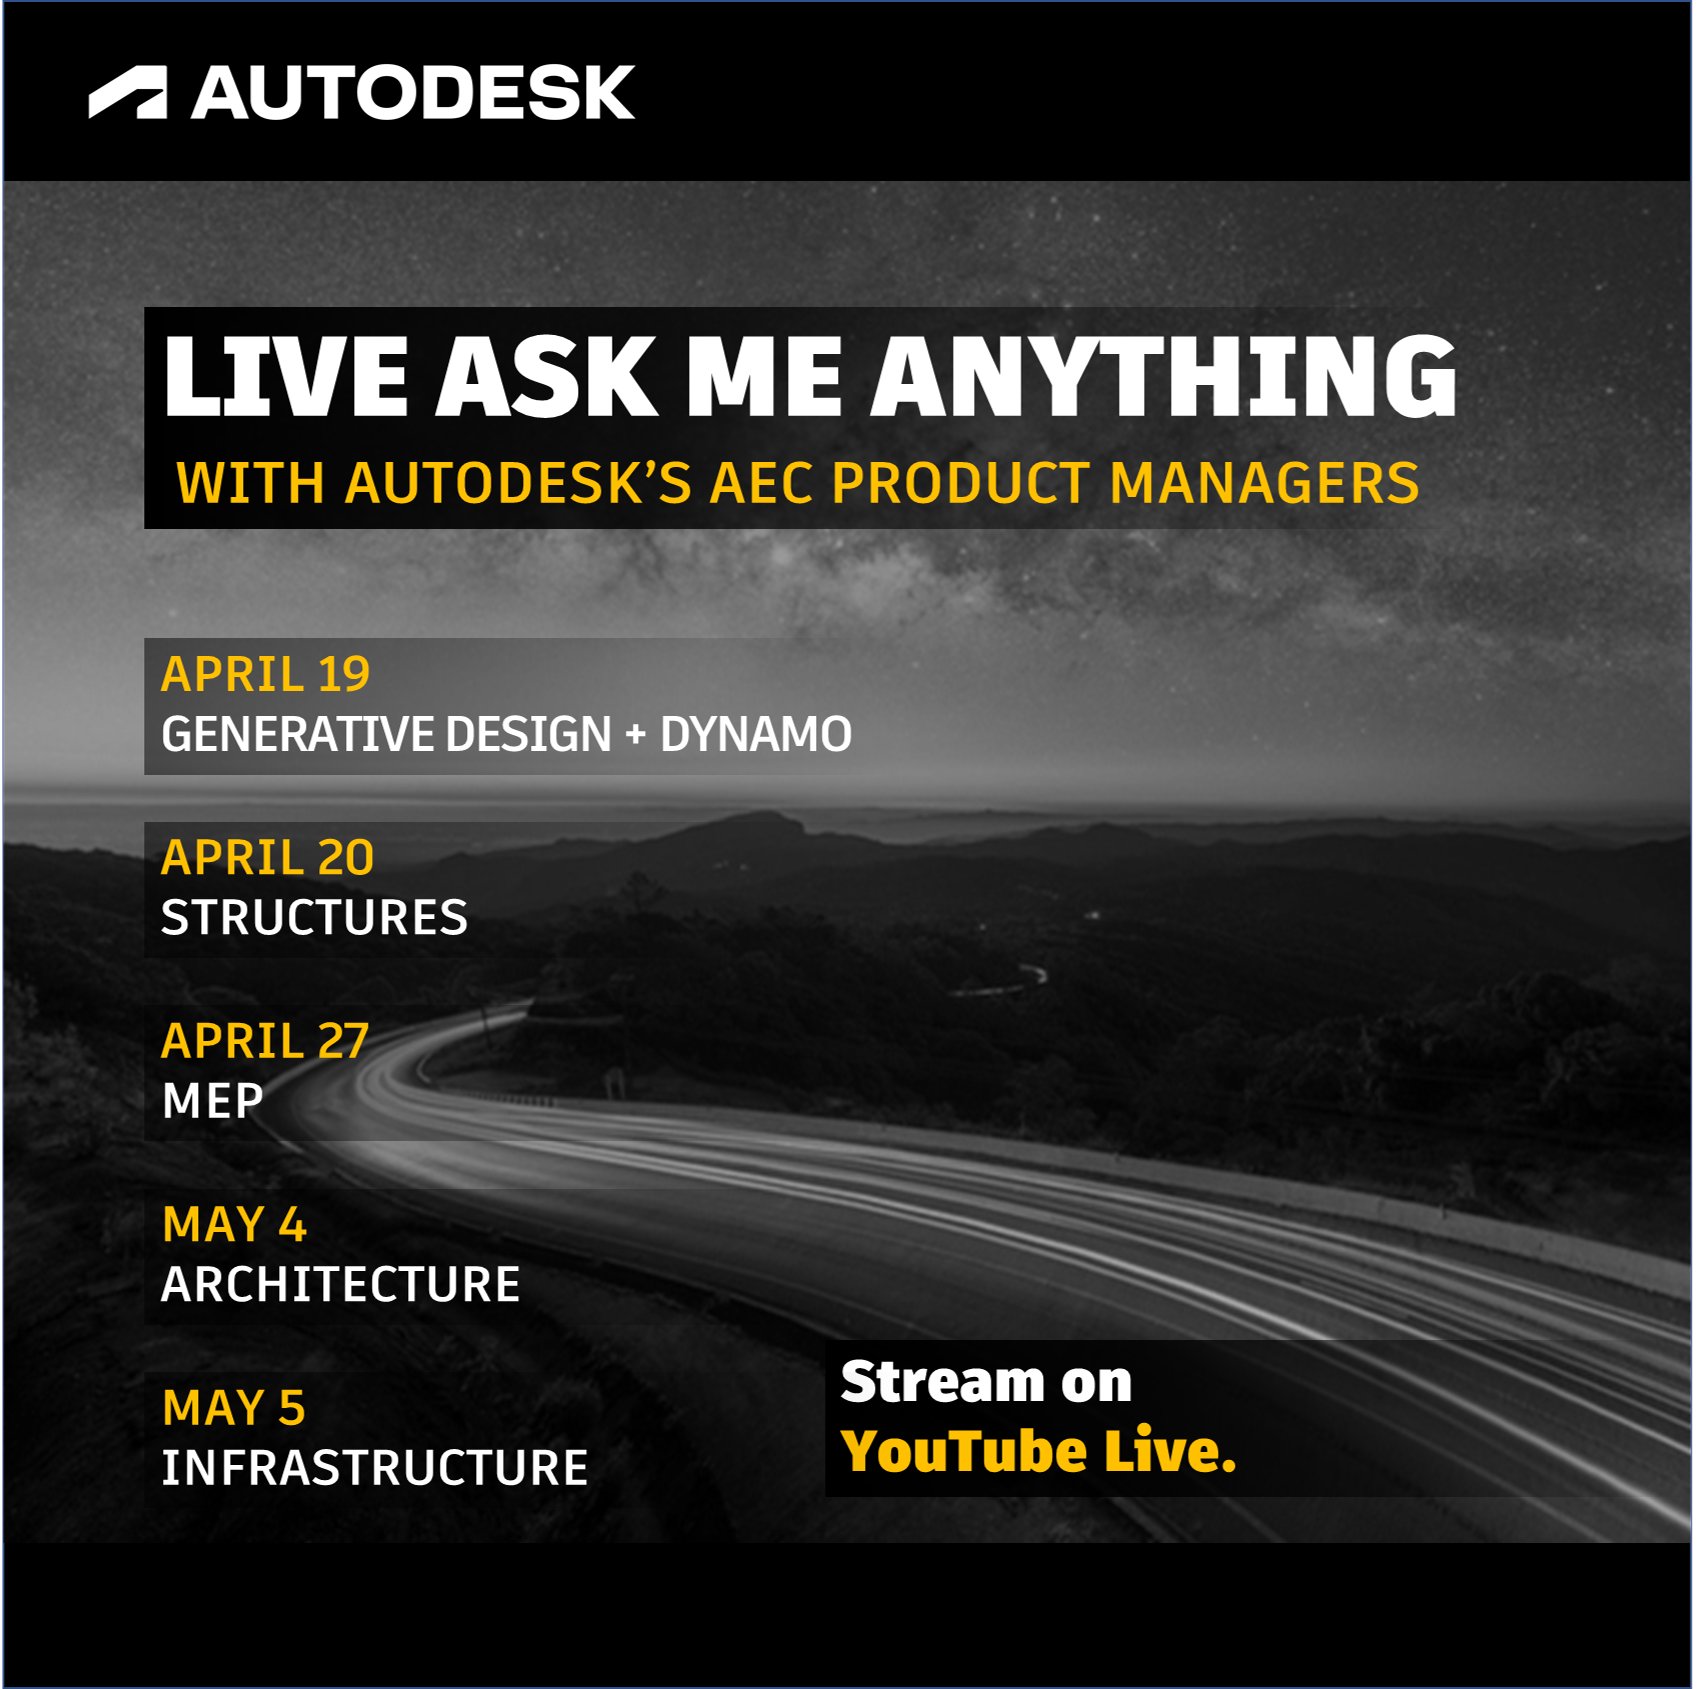 Autodesk live chat